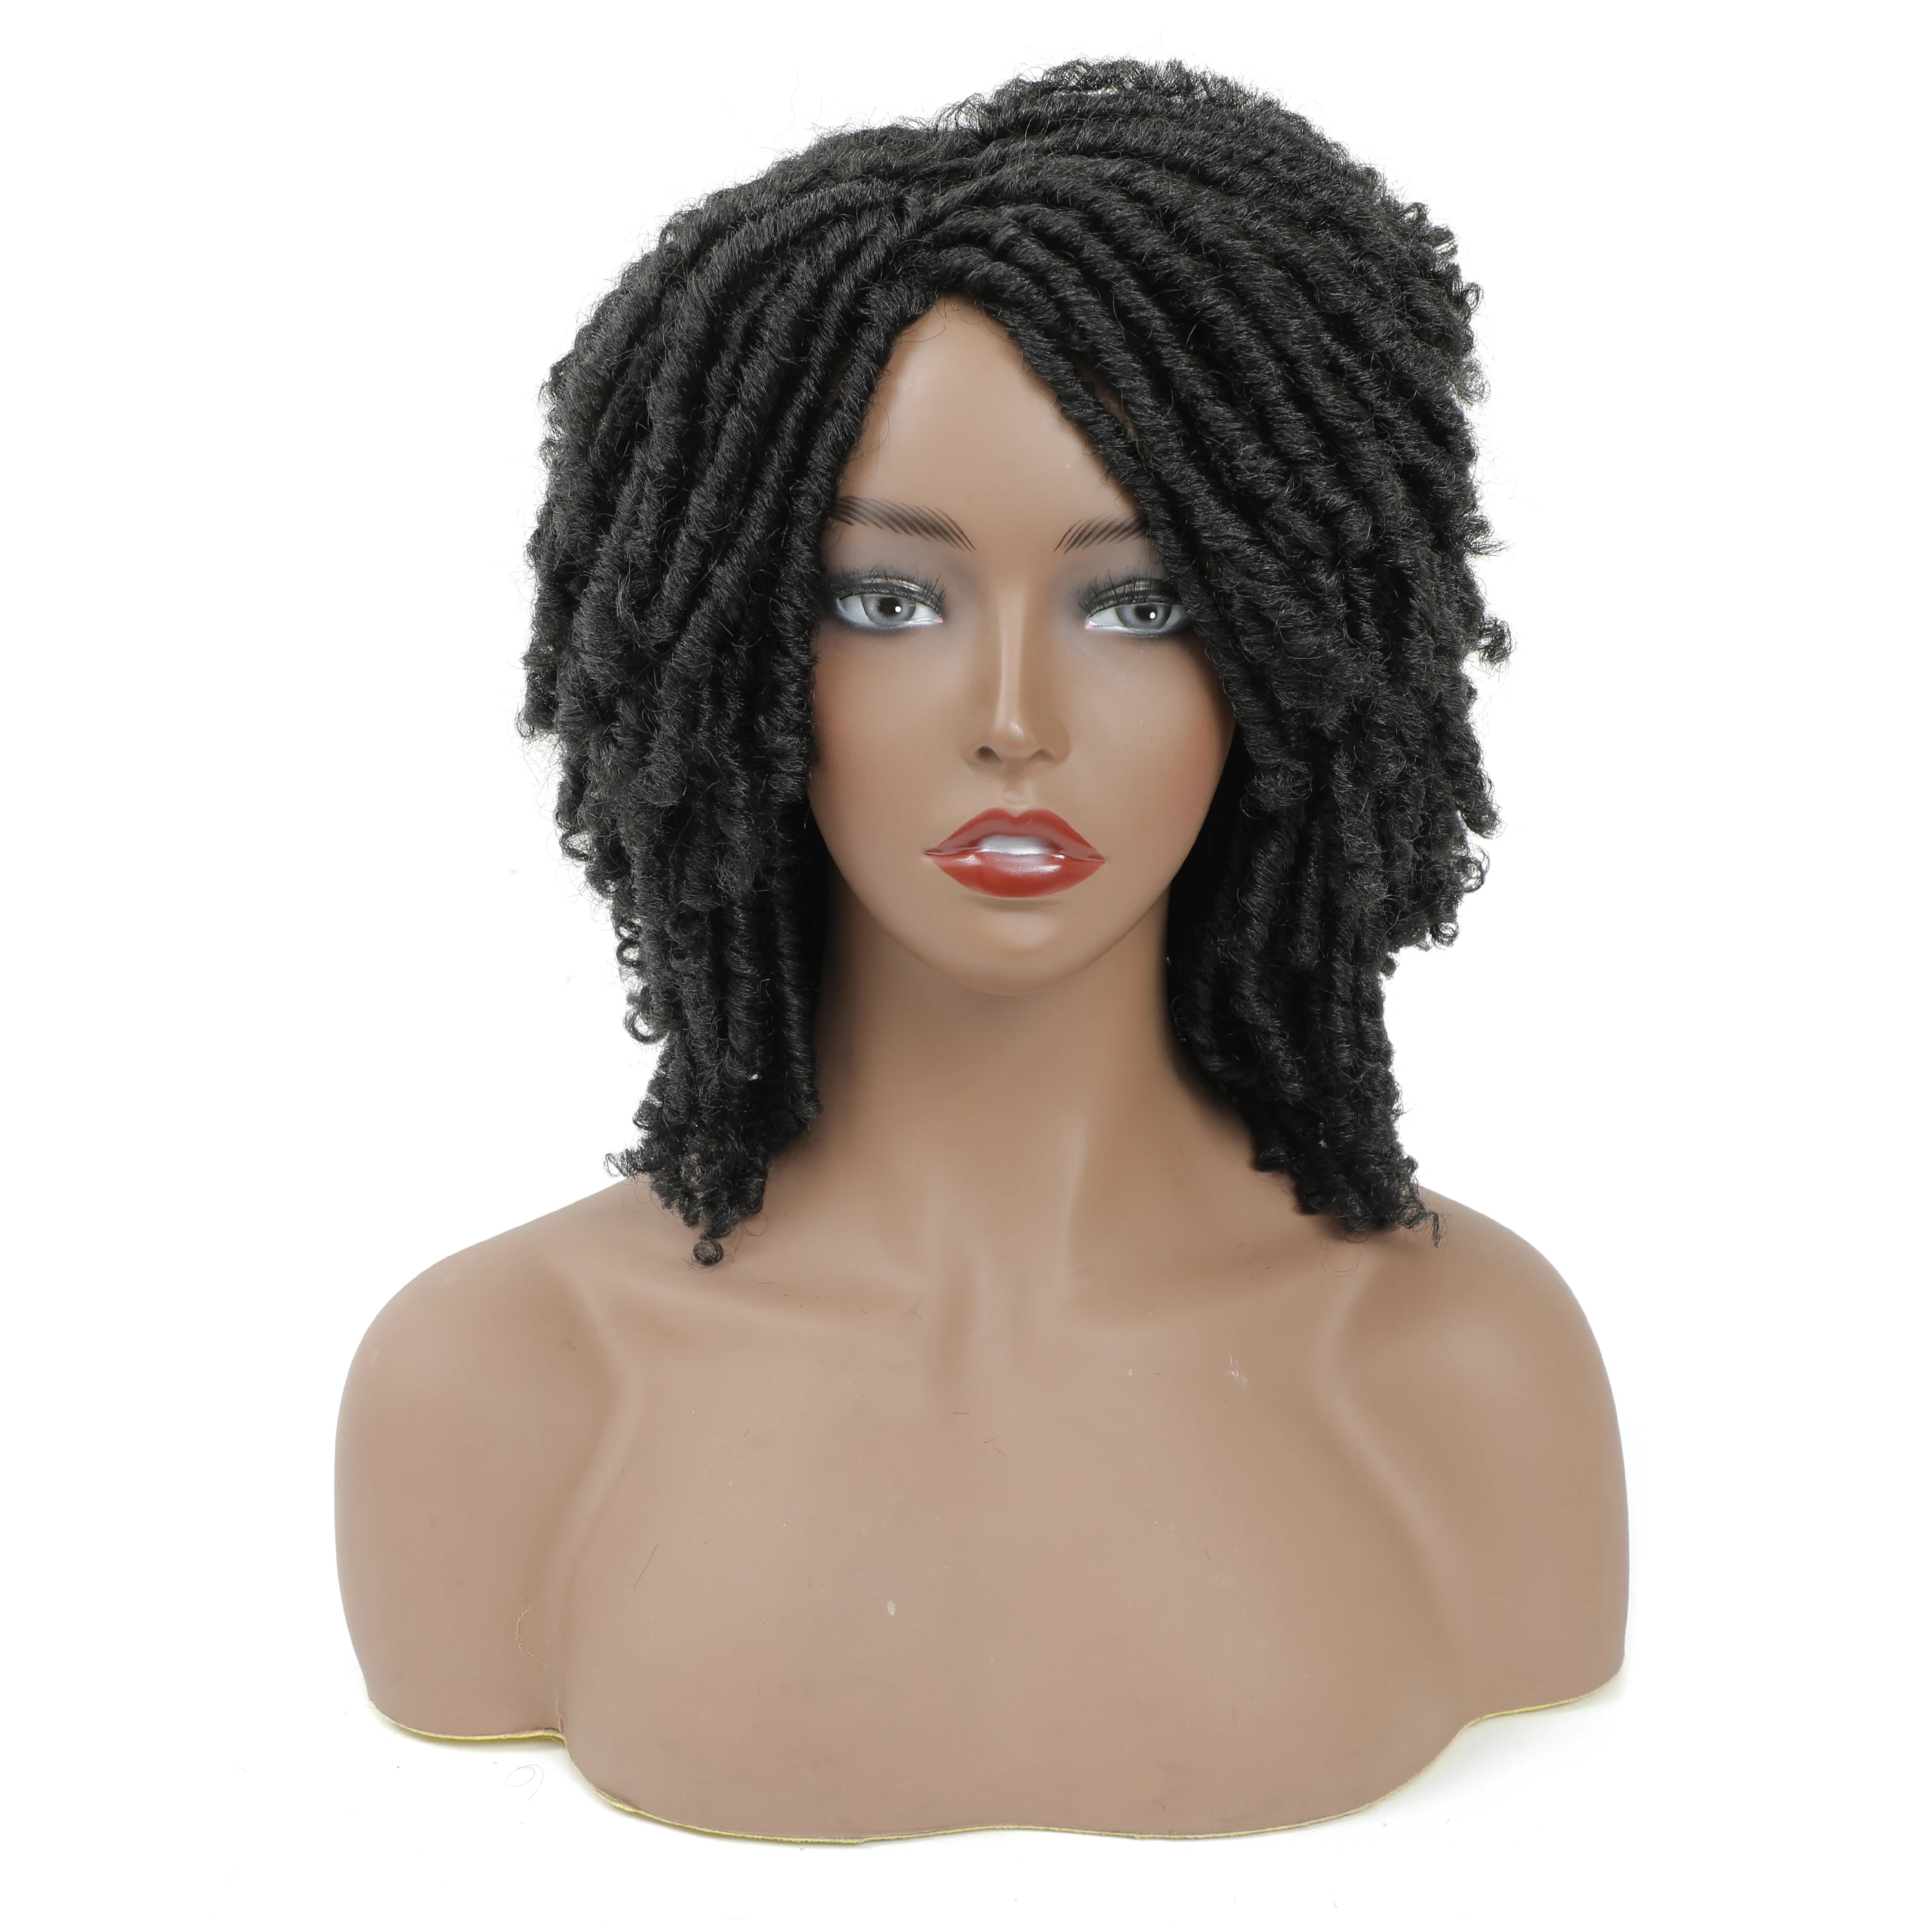 

MYZYR Short Synthetic wig For Black Women 14"Inch High Temperature Fiber Dreadlock Ombre Soft Crochet Twist braid Hair, Pink,black